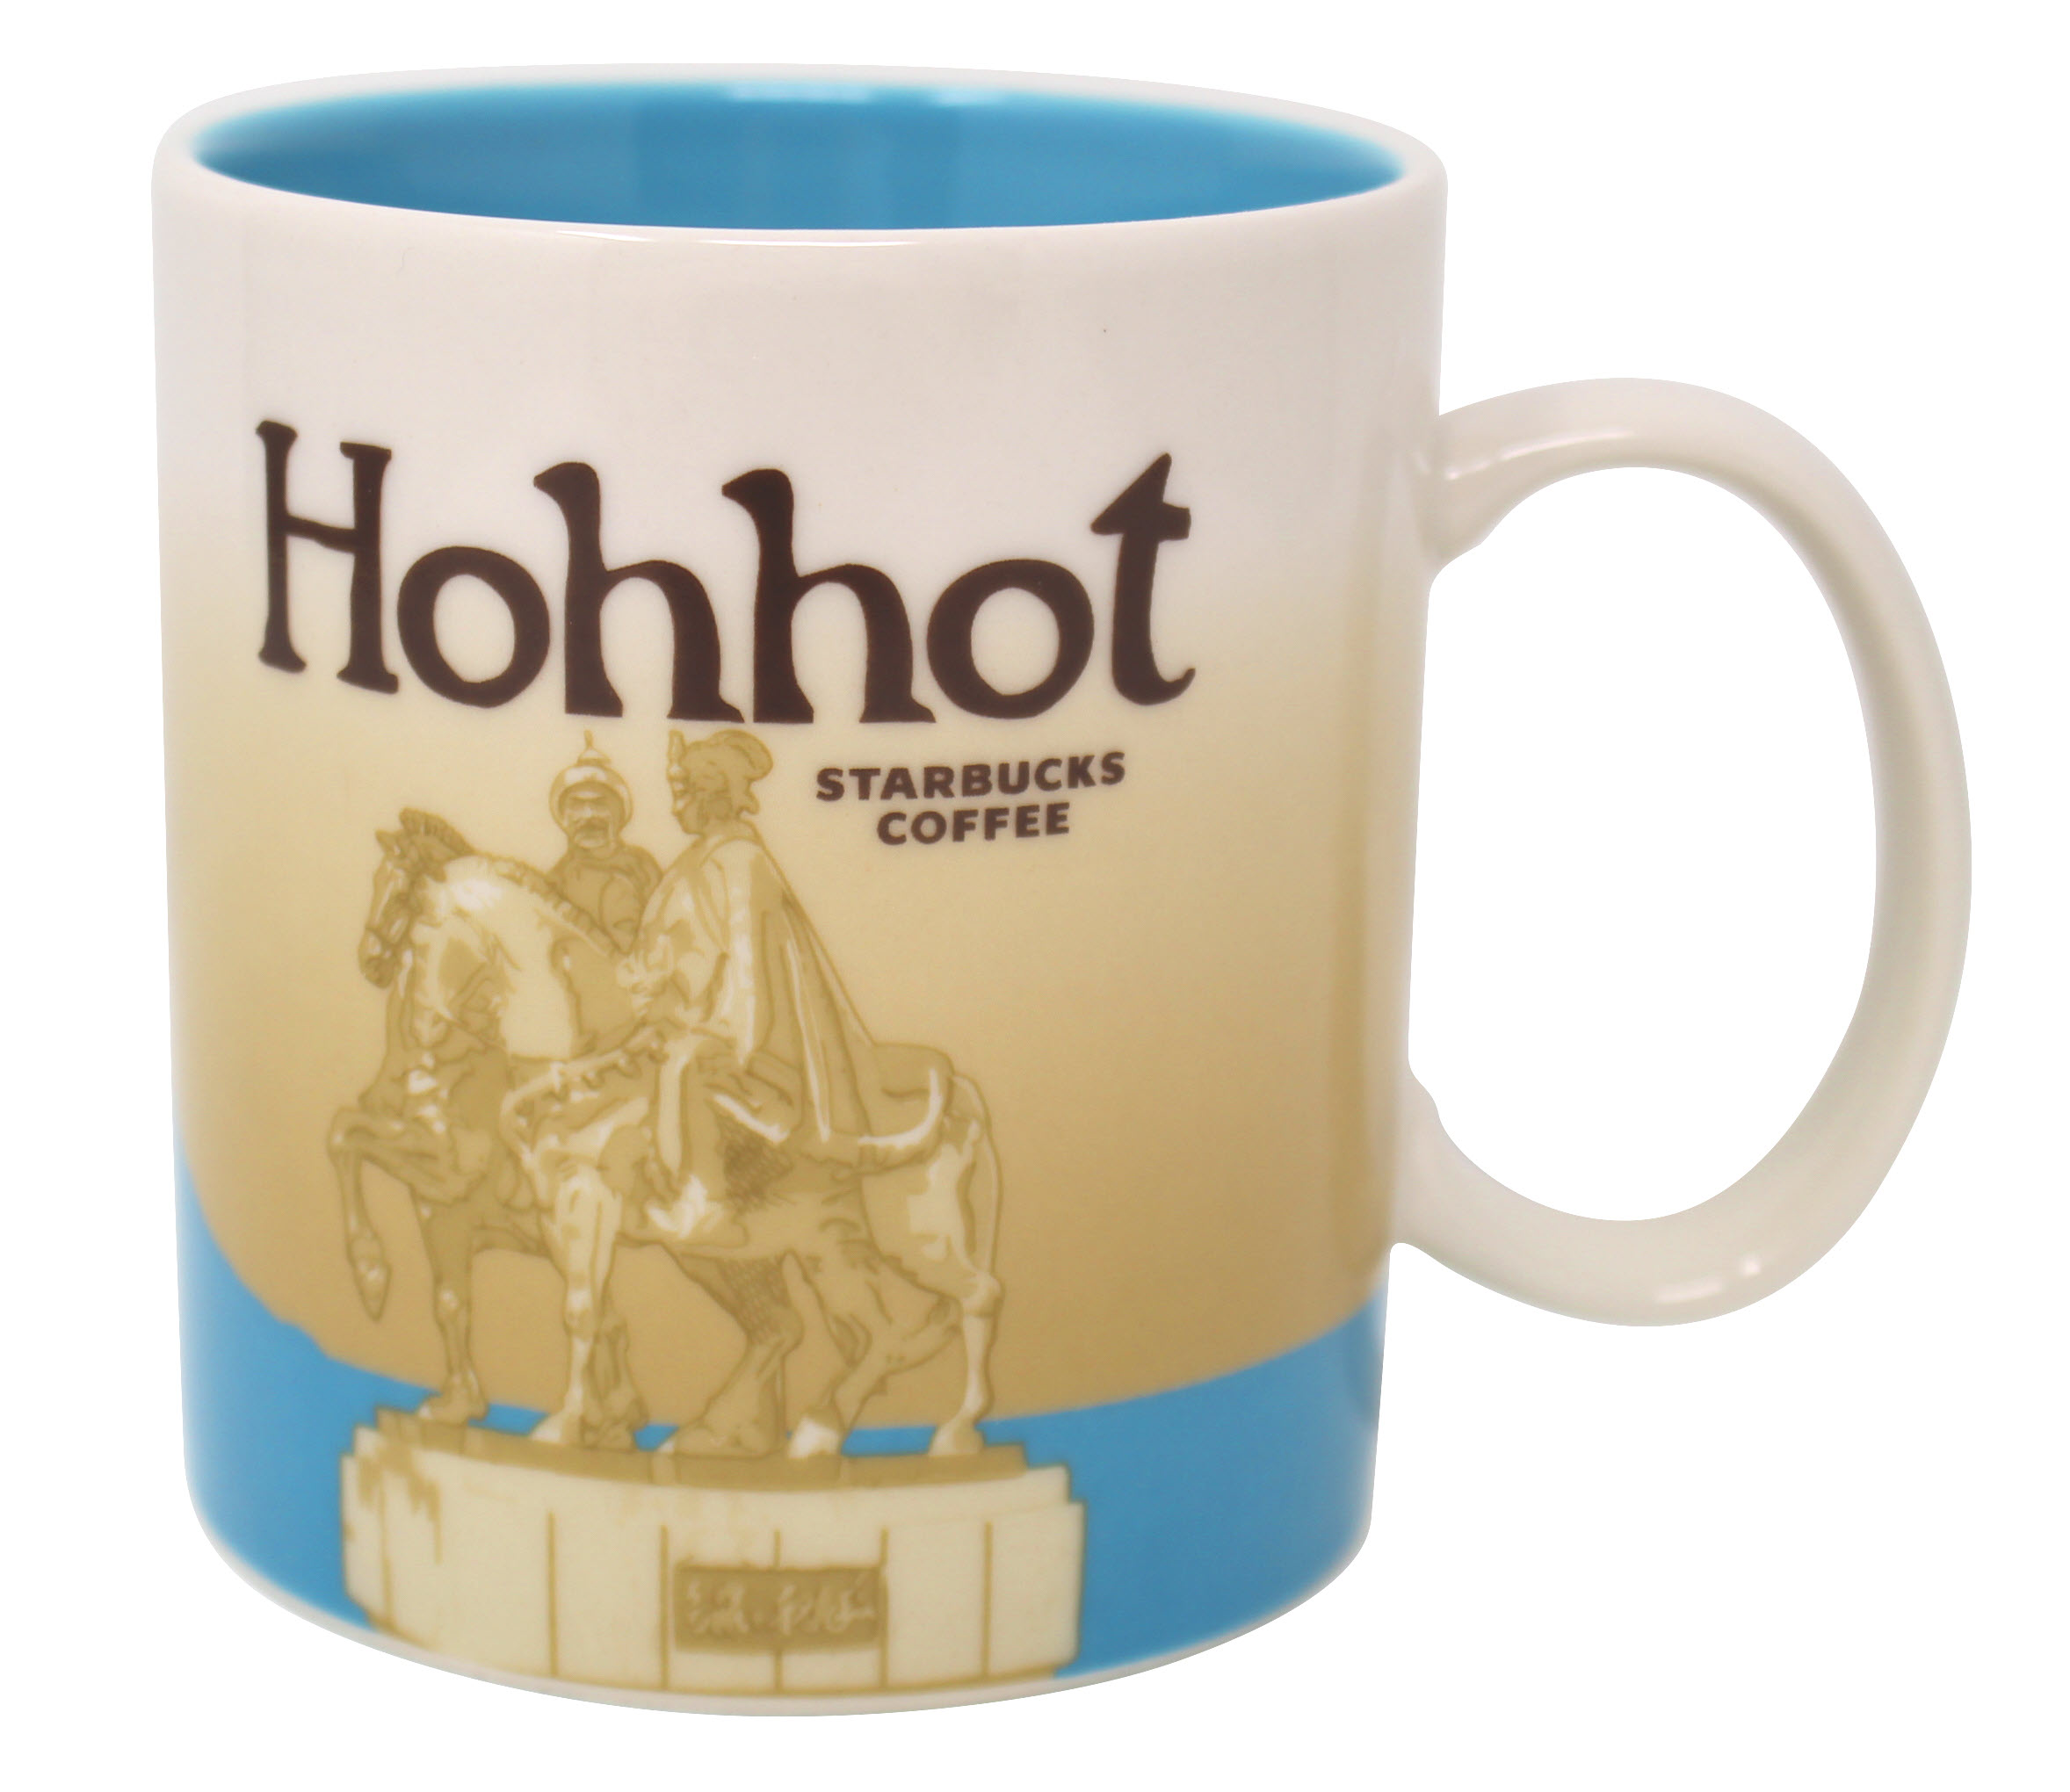 Starbucks Global Icon Series Hohhot Ceramic Mug, 16 Oz